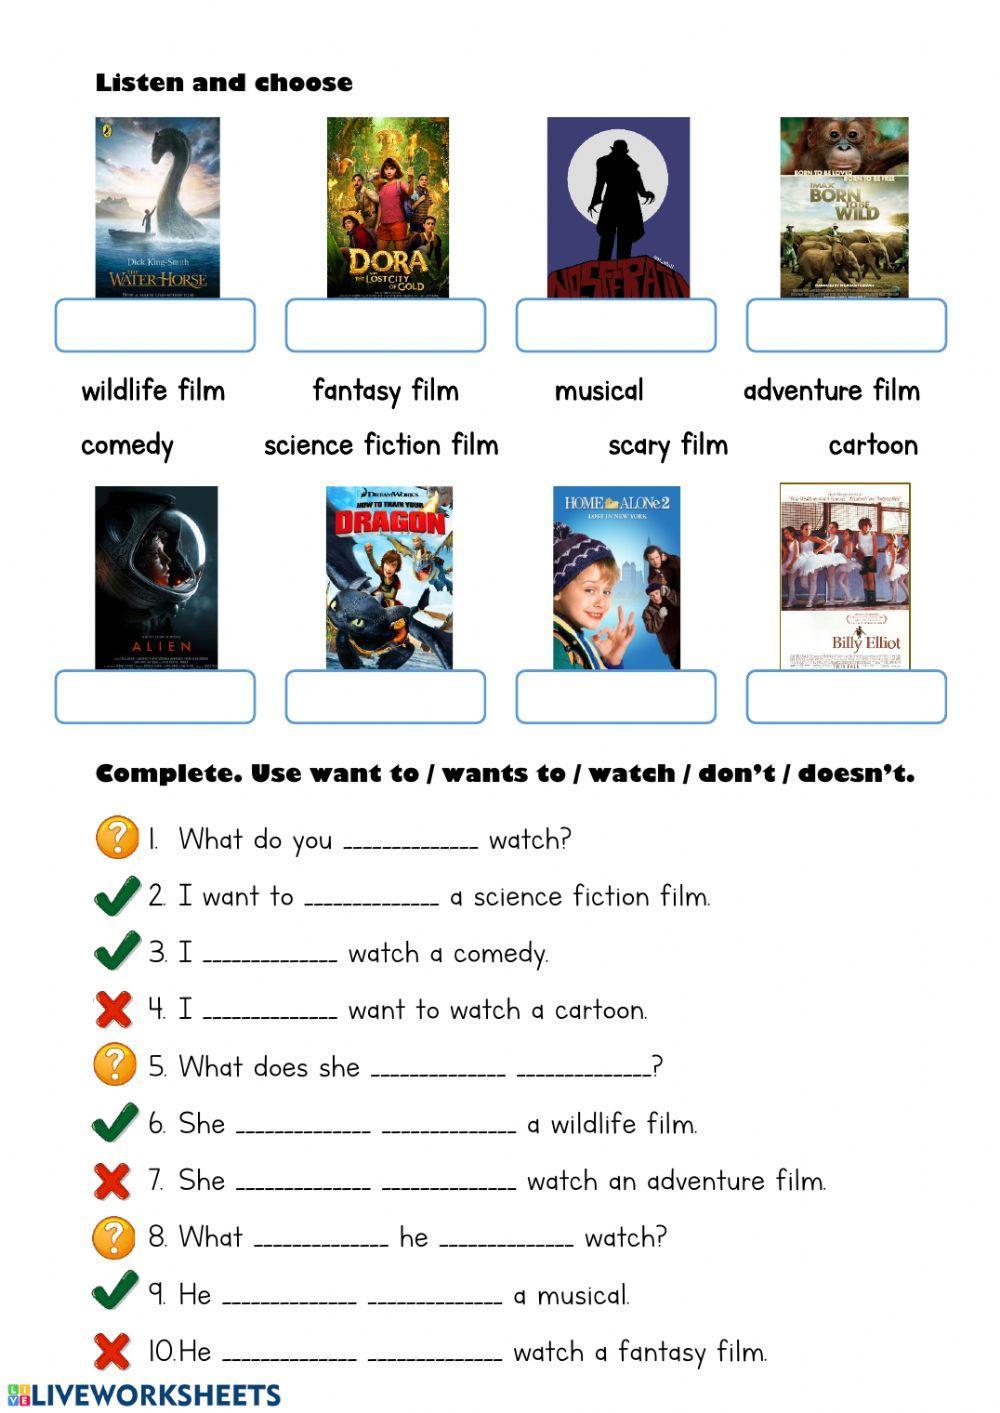 Types of films-1